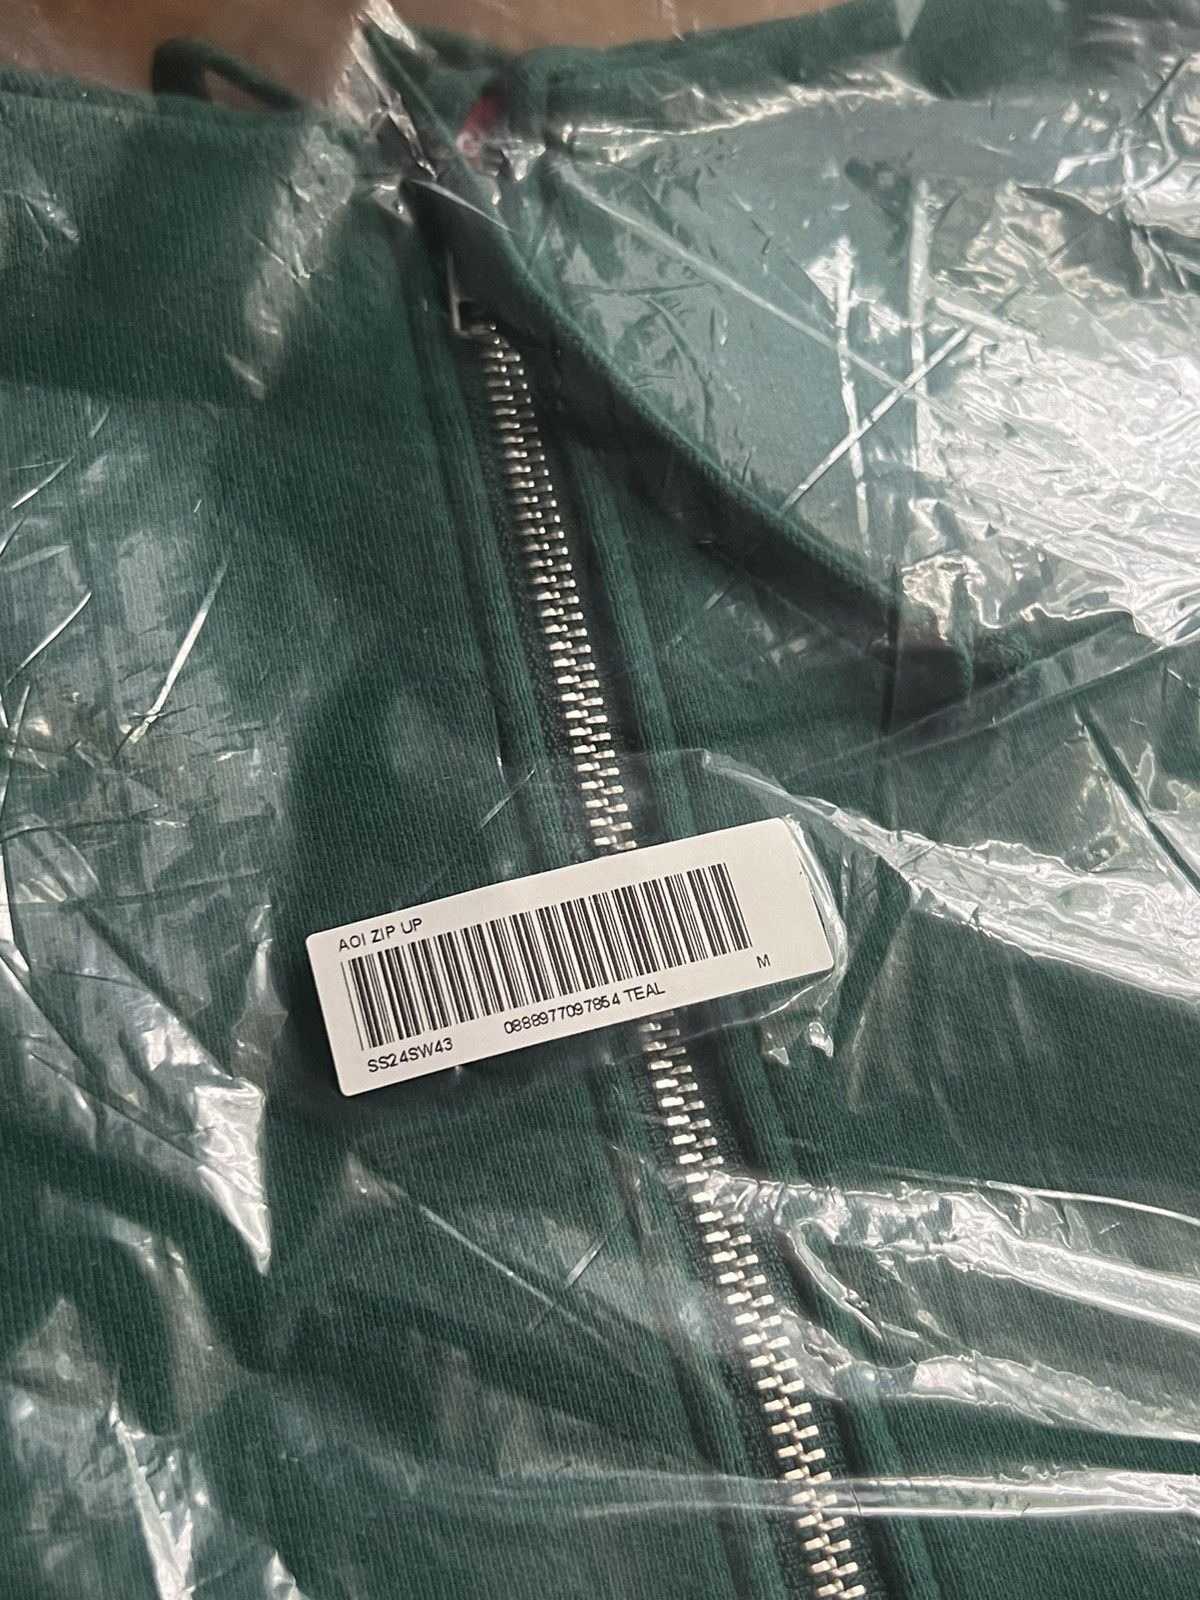 Supreme Supreme AOI Zip Up Teal Green Hooded Sweatshirt SS24 | Grailed